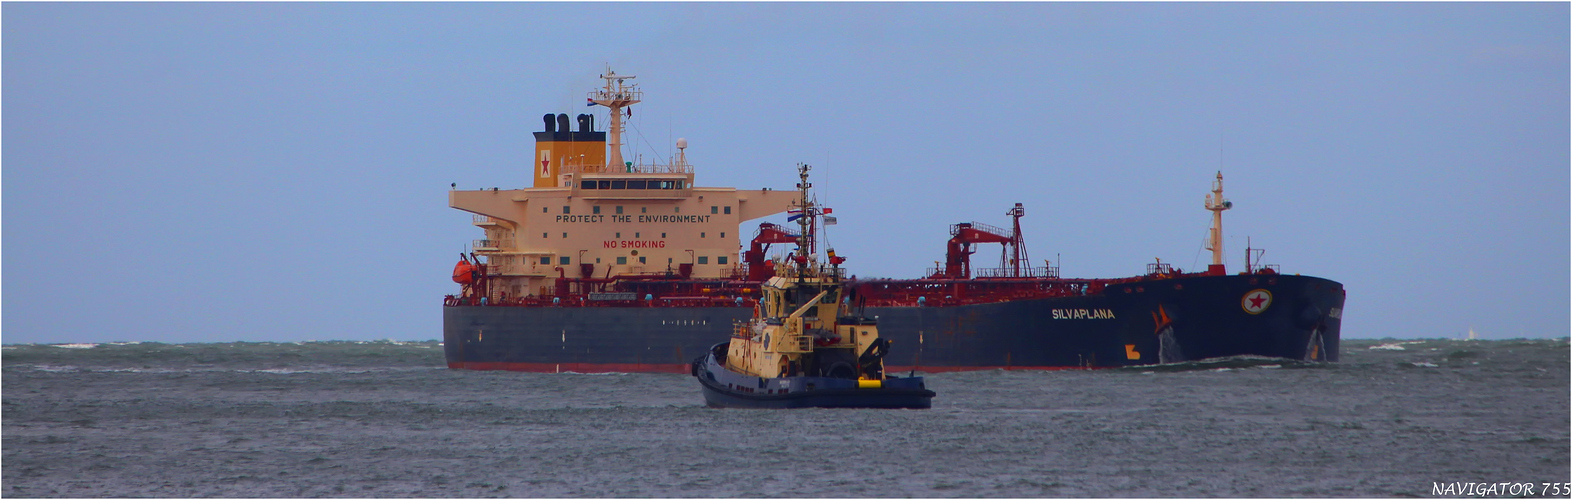 SILVAPLANA / Crude Oil Tanker / RotterdaI